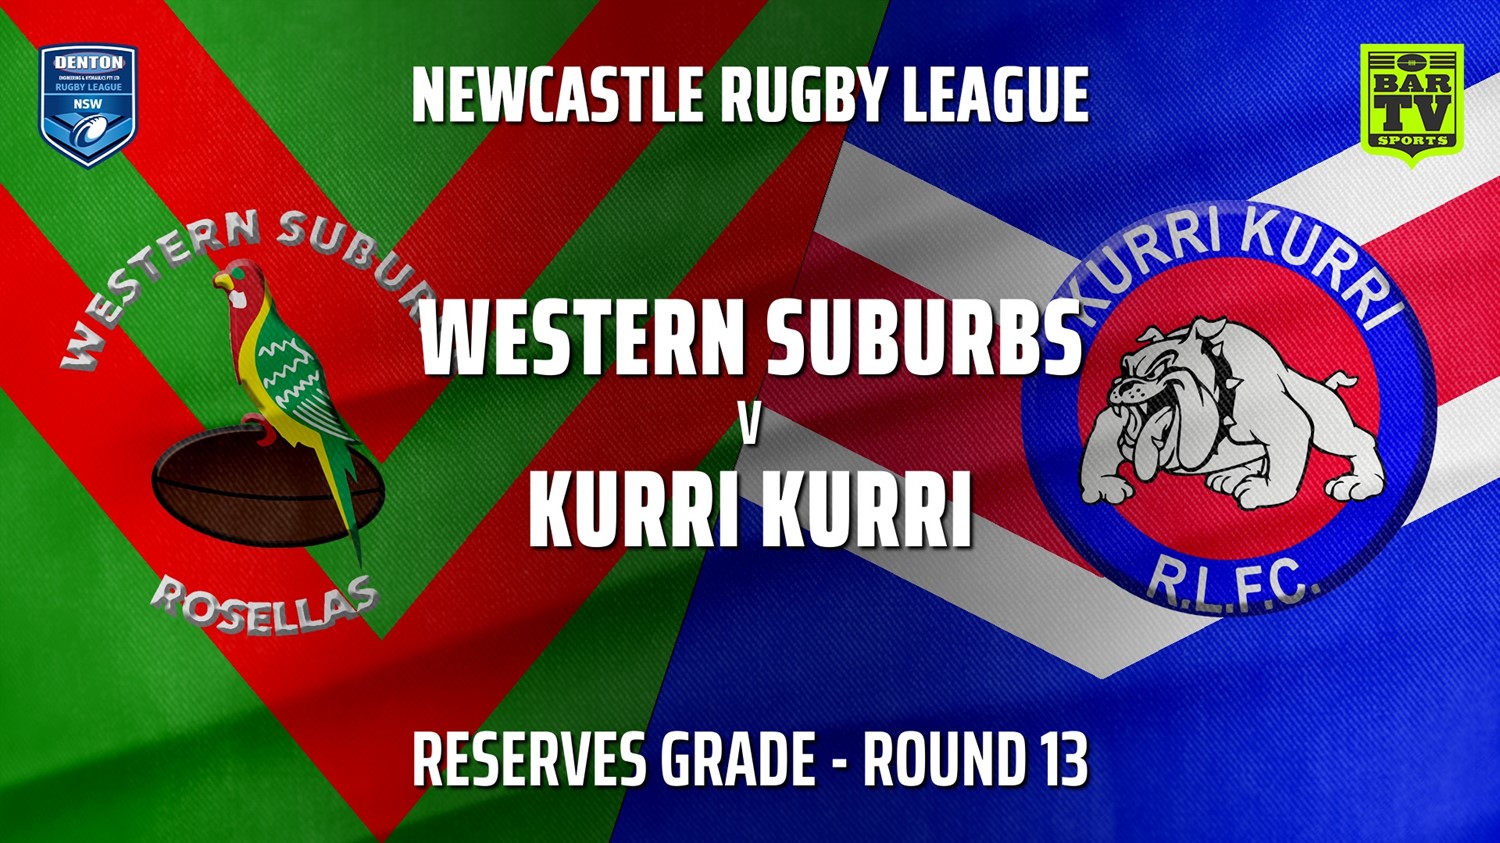 210703-Newcastle Round 13 - Reserves Grade - Western Suburbs Rosellas v Kurri Kurri Bulldogs Slate Image